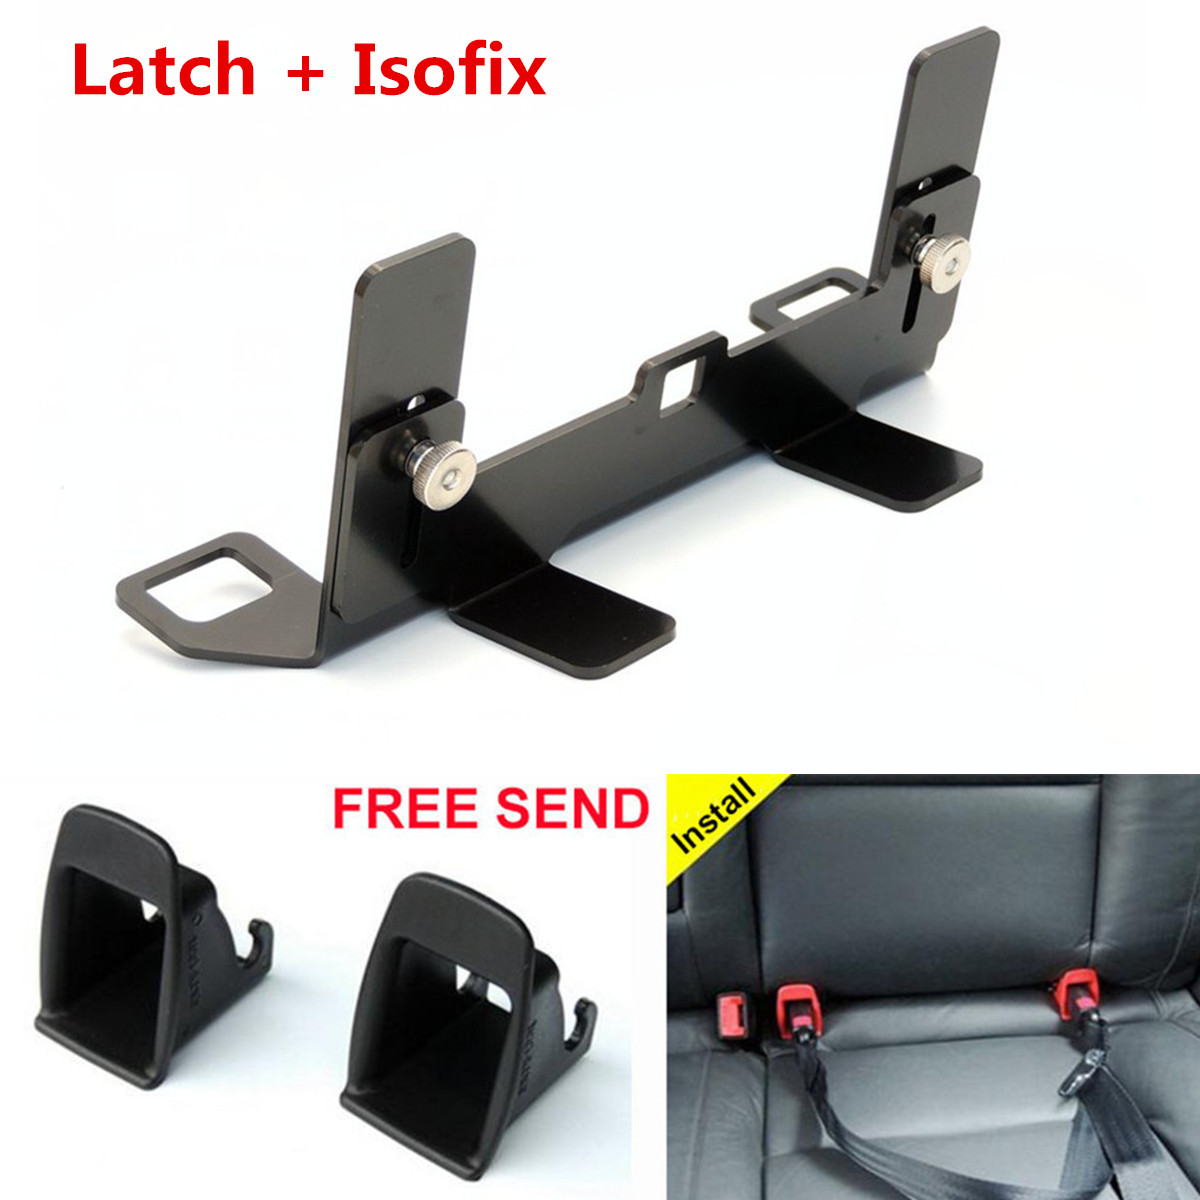 latch isofix compatible